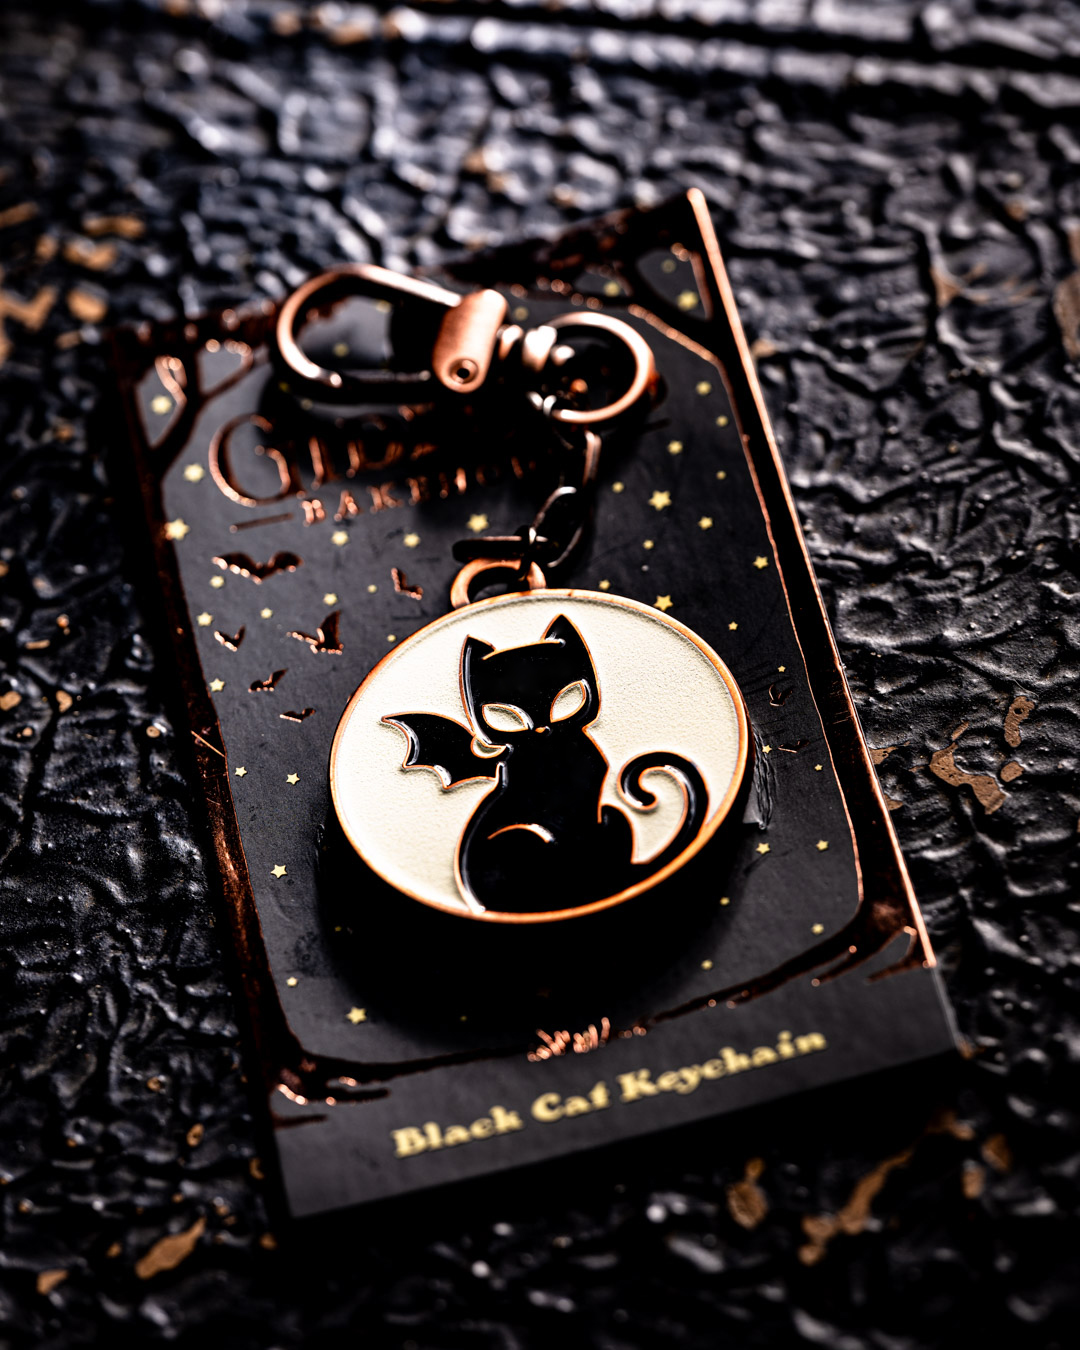 Gideon's Black Cat Keychain!